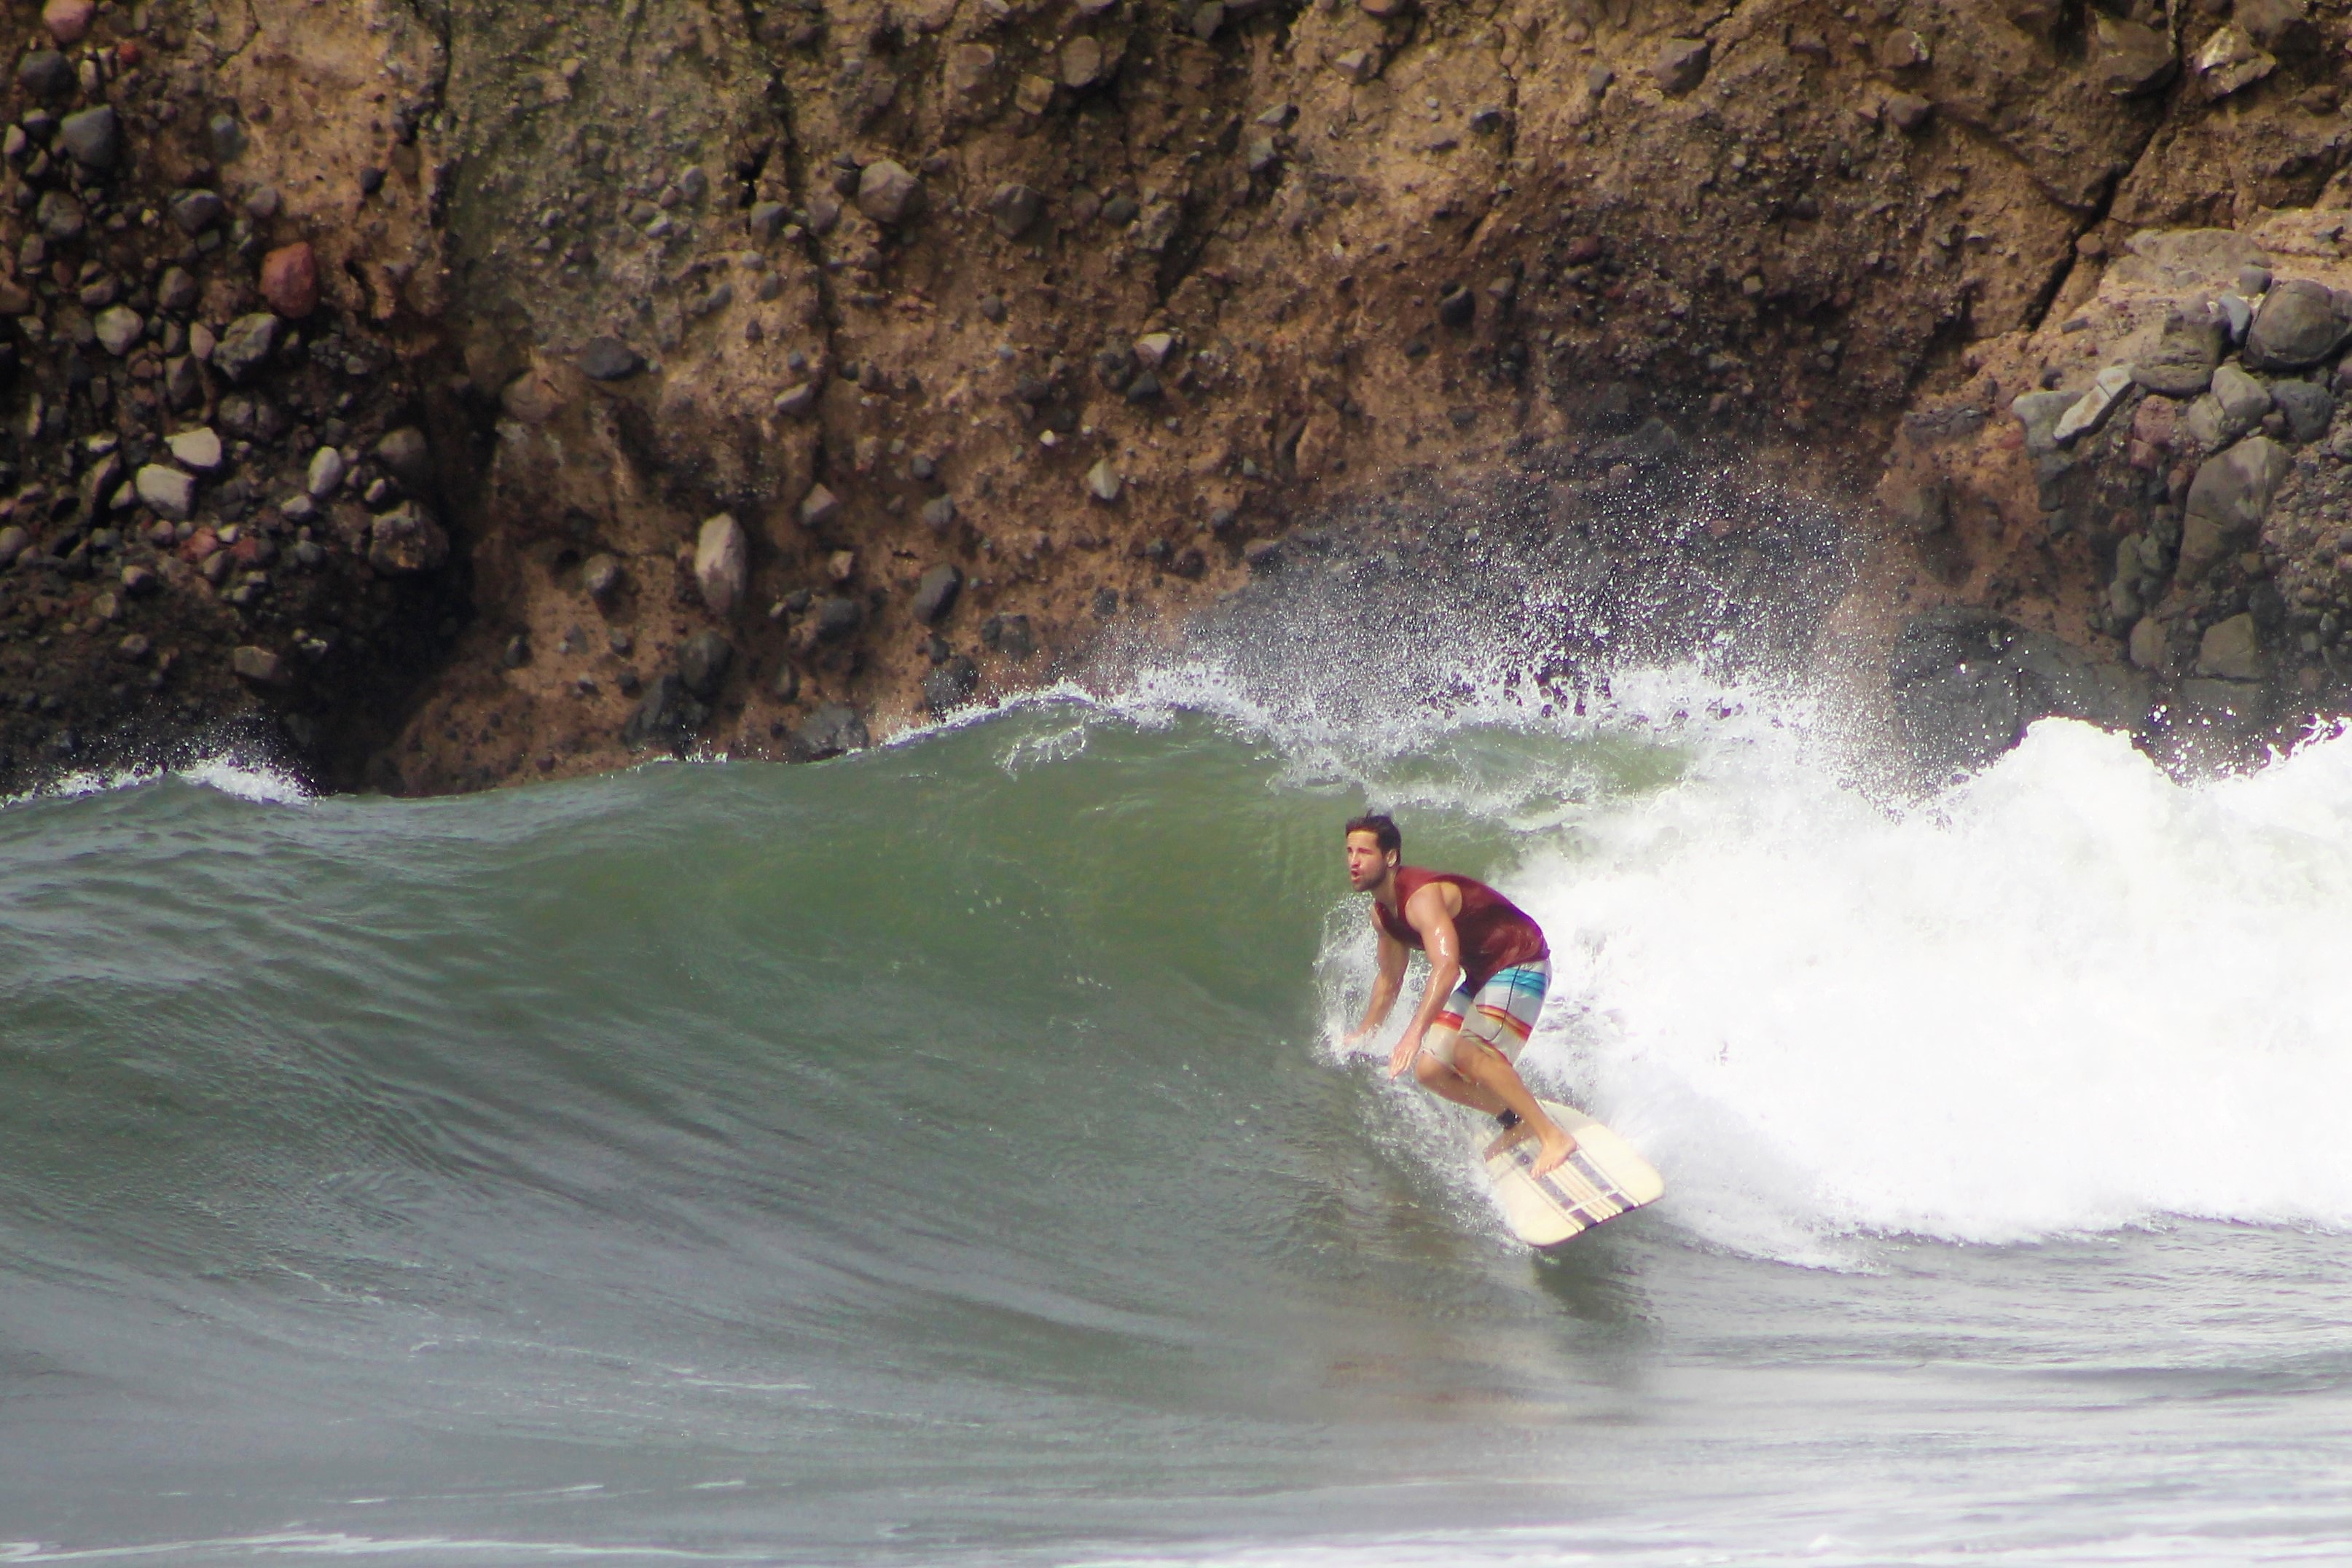 Palmarcito Surf Spot